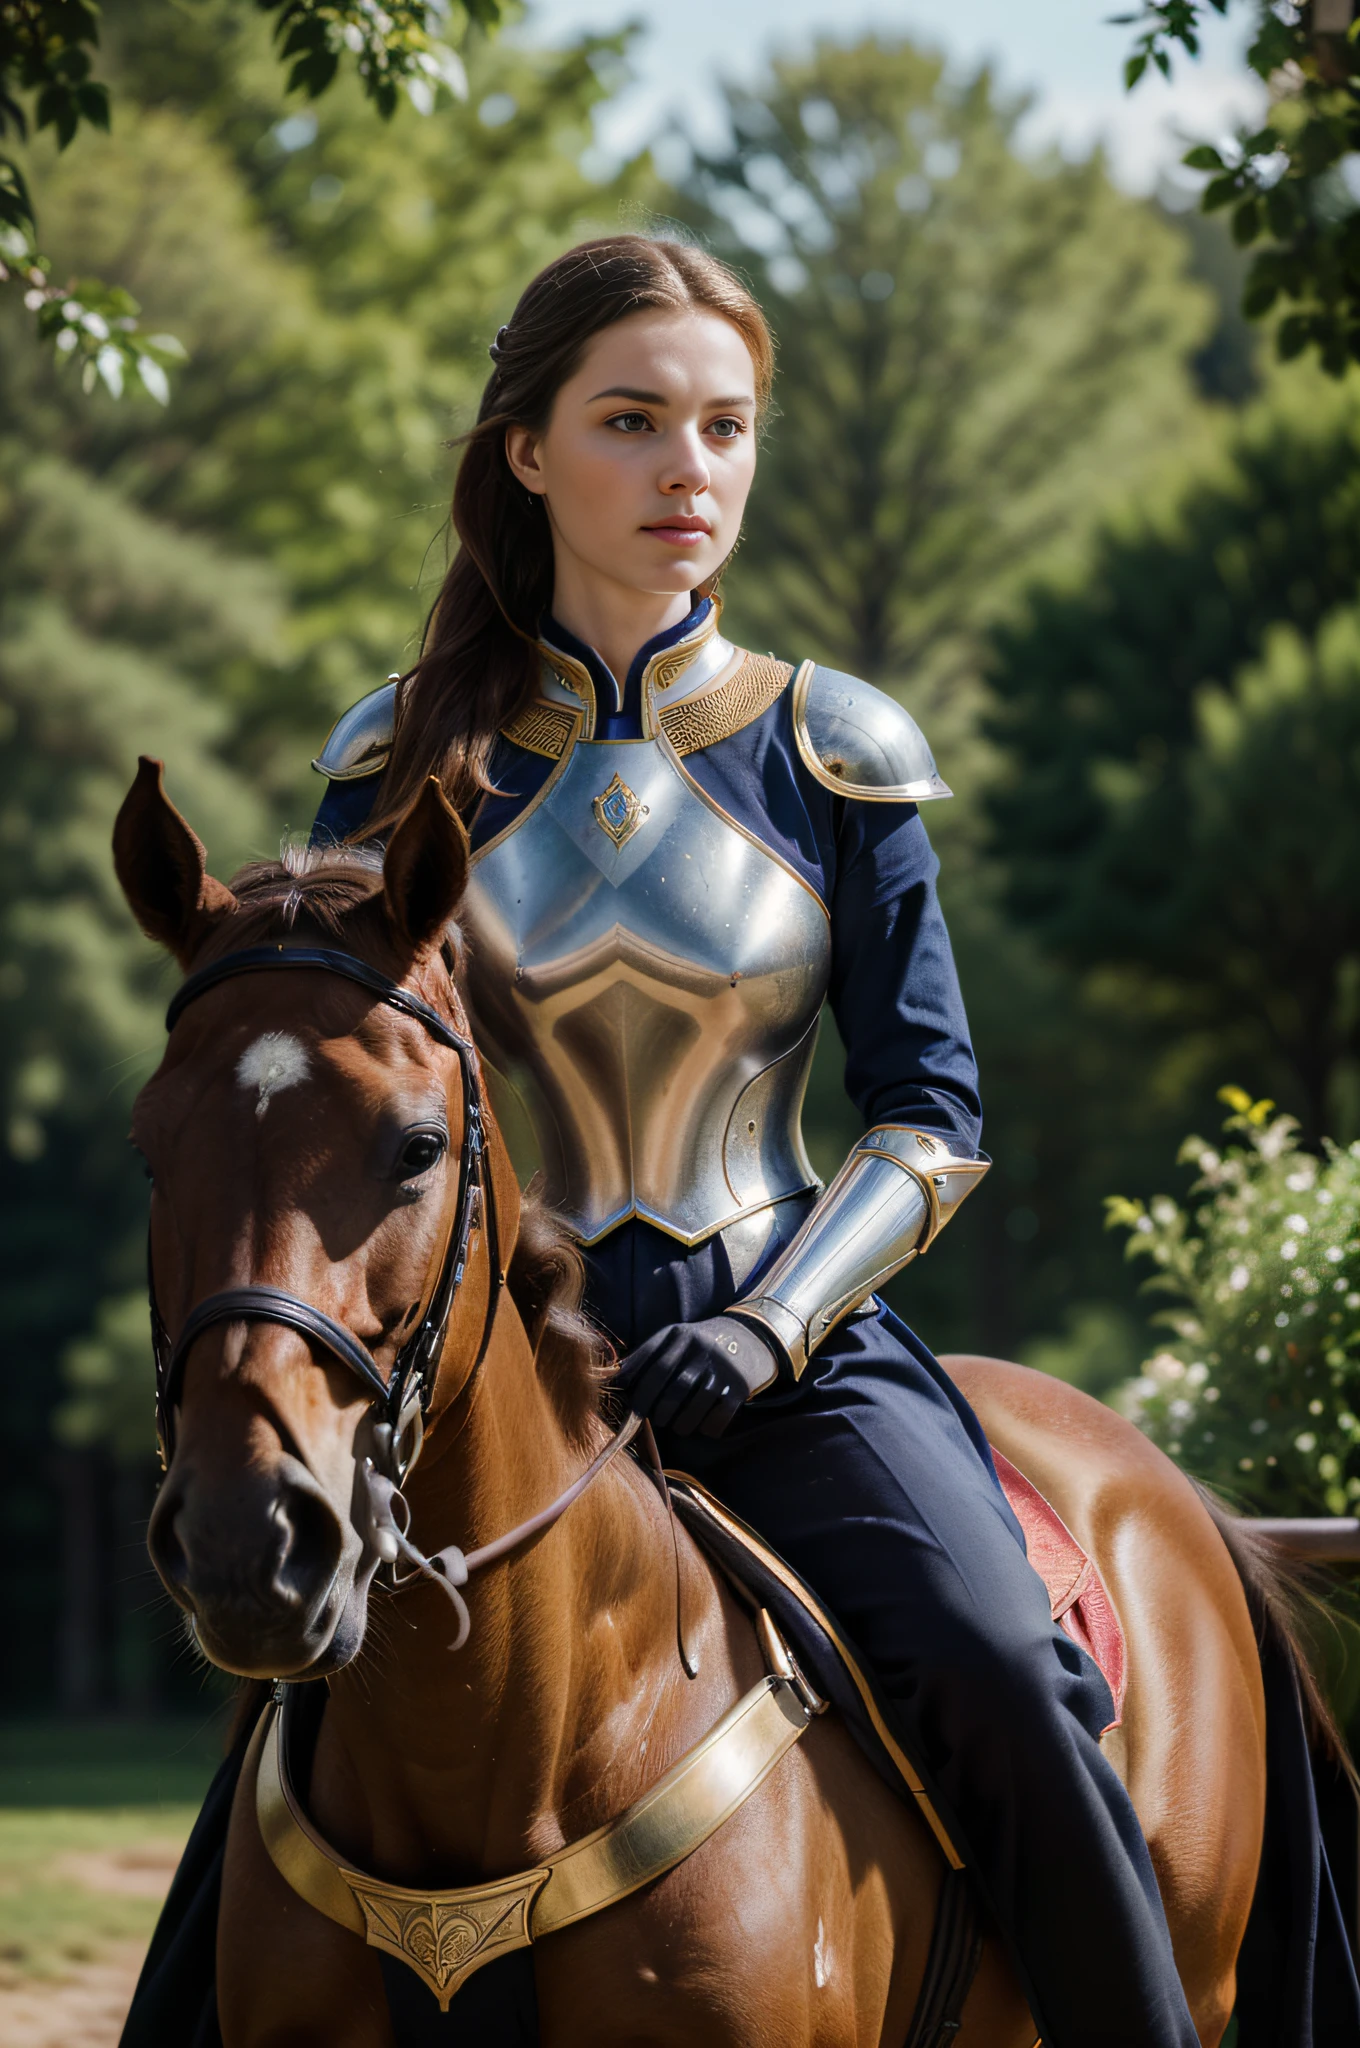 Wide shot Hyper Realistic Portrait Photograph Royal Knight on a horse, 1名女孩年齡25瑞典語, K, 傑作, 超高畫質